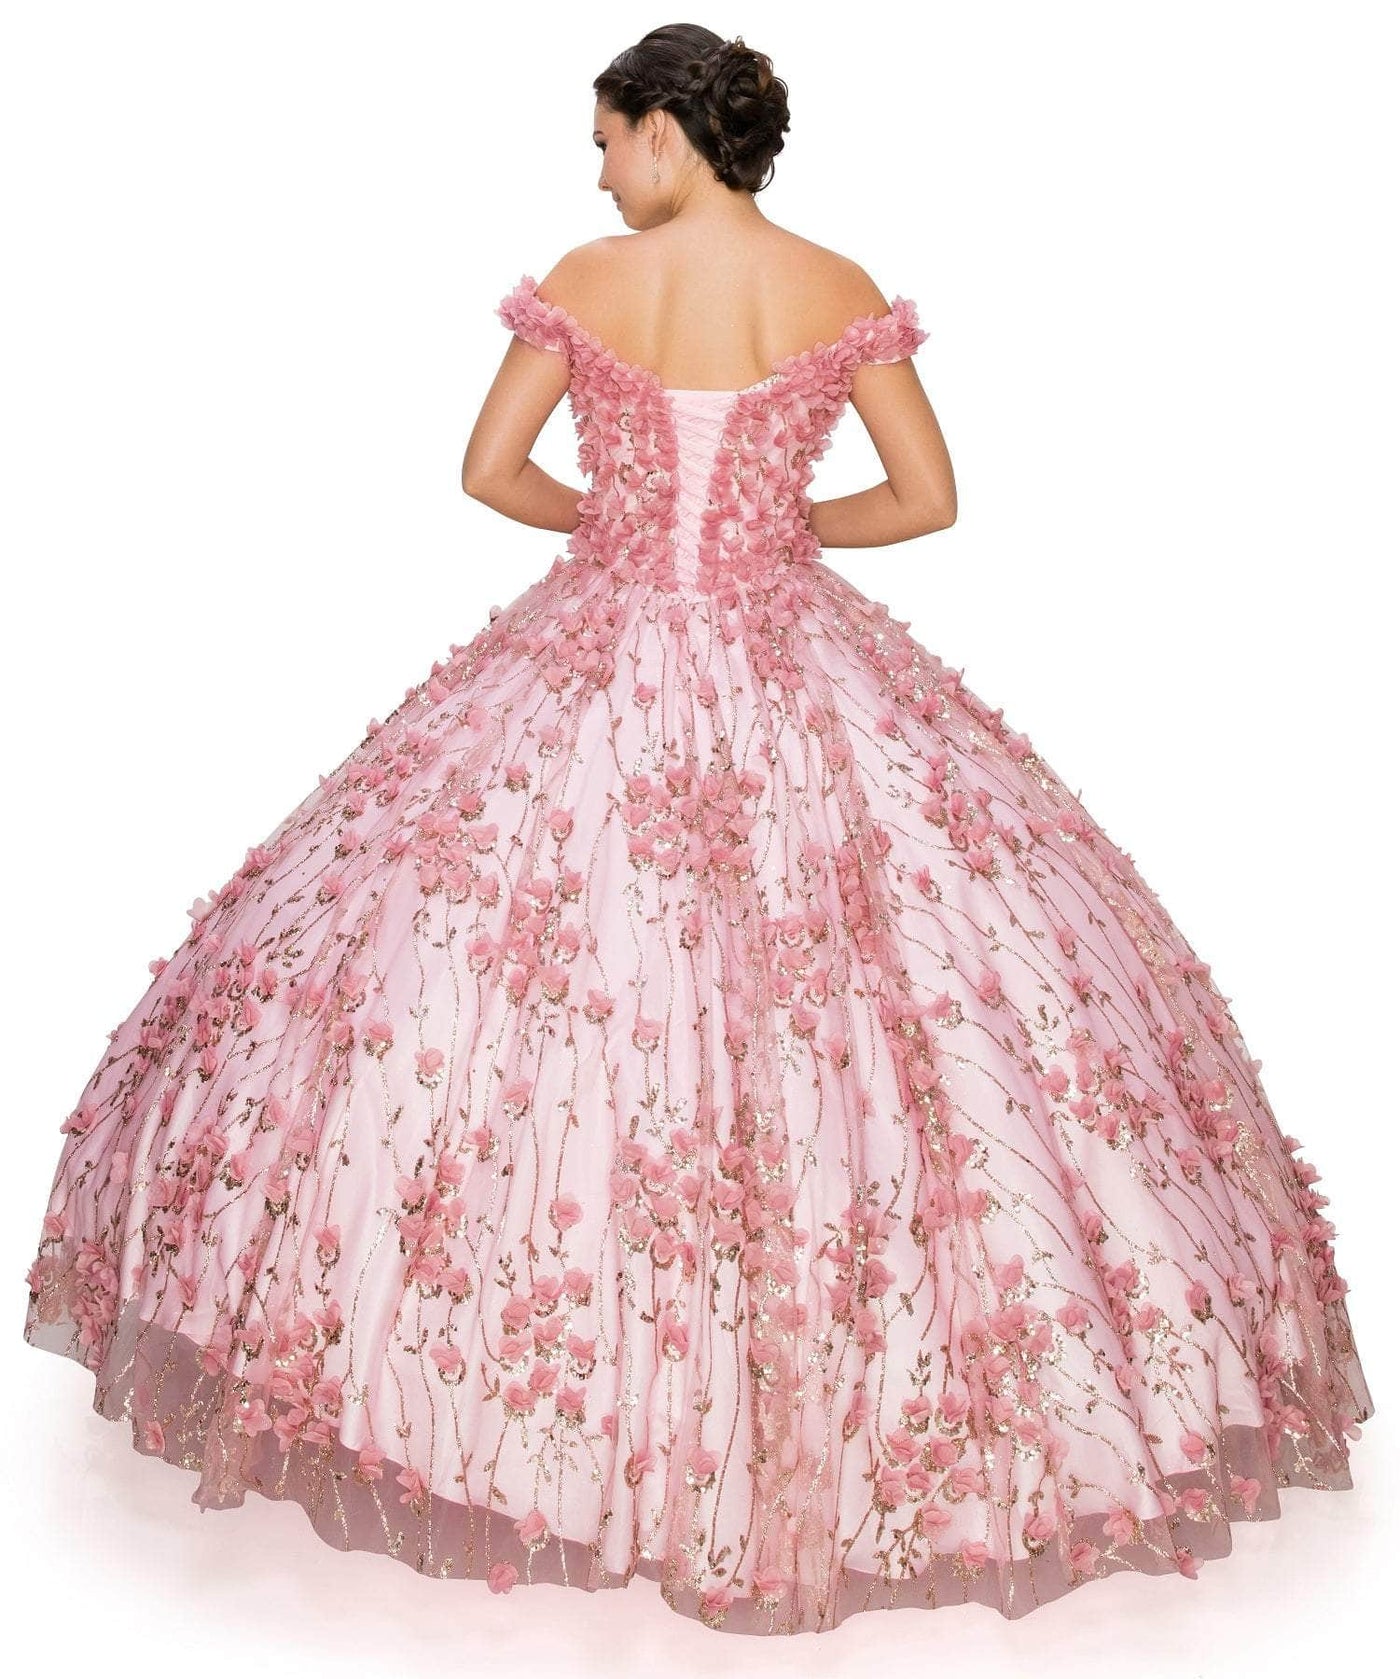 Cinderella Couture 8021J - 3D Floral Off-Shoulder Ballgown Special Occasion Dress